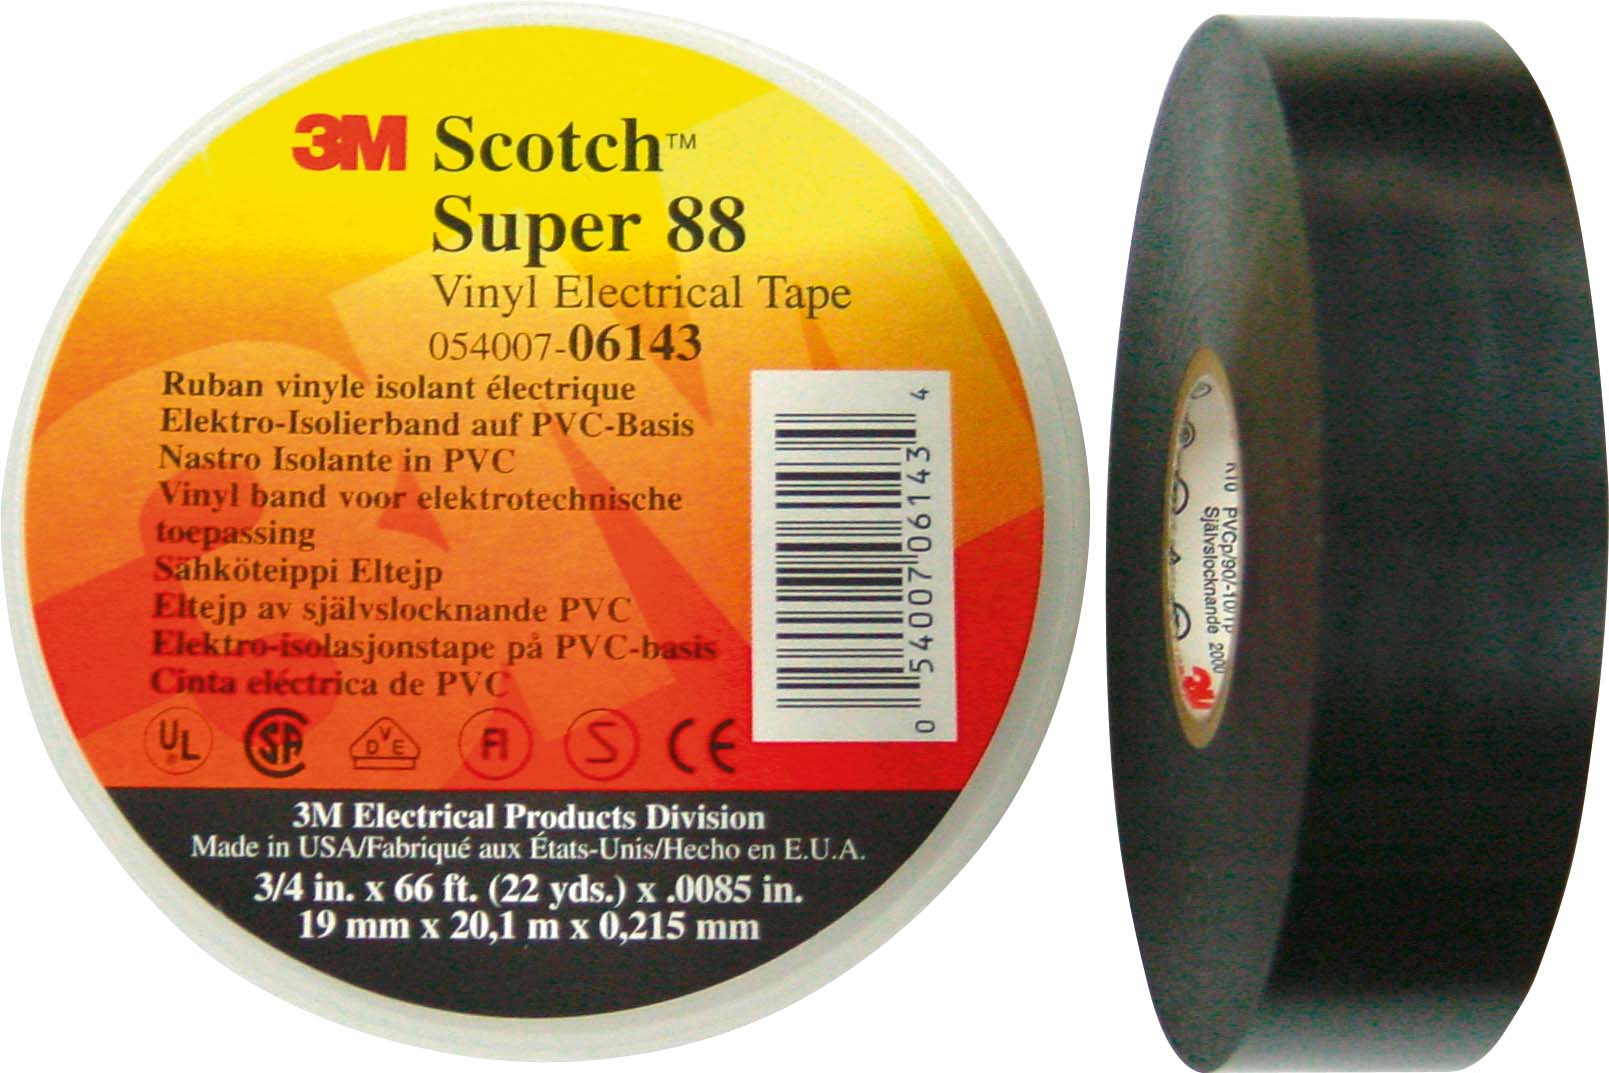 3M Deutschland PVC Elektro-Isolierband 19mm x20m sw ScotchSuper88 19x20 - 7100079942